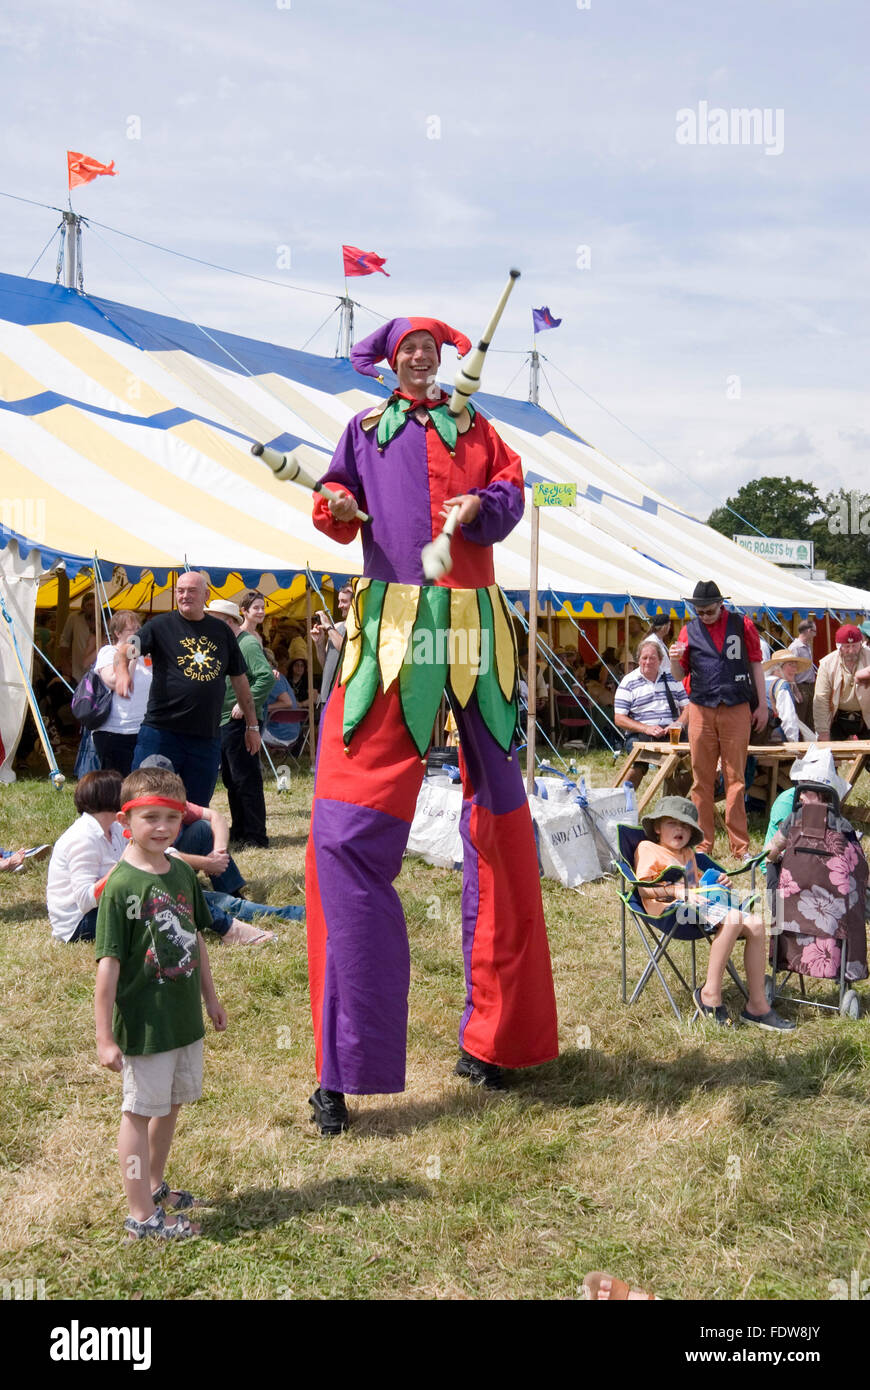 TEWKESBURY, GLOC. UK-11 Juli: Jester auf Stelzen Spaziergänge unter Menge jonglieren am 12. Juli 2014 bei Tewkesbury Mittelalterfest Stockfoto